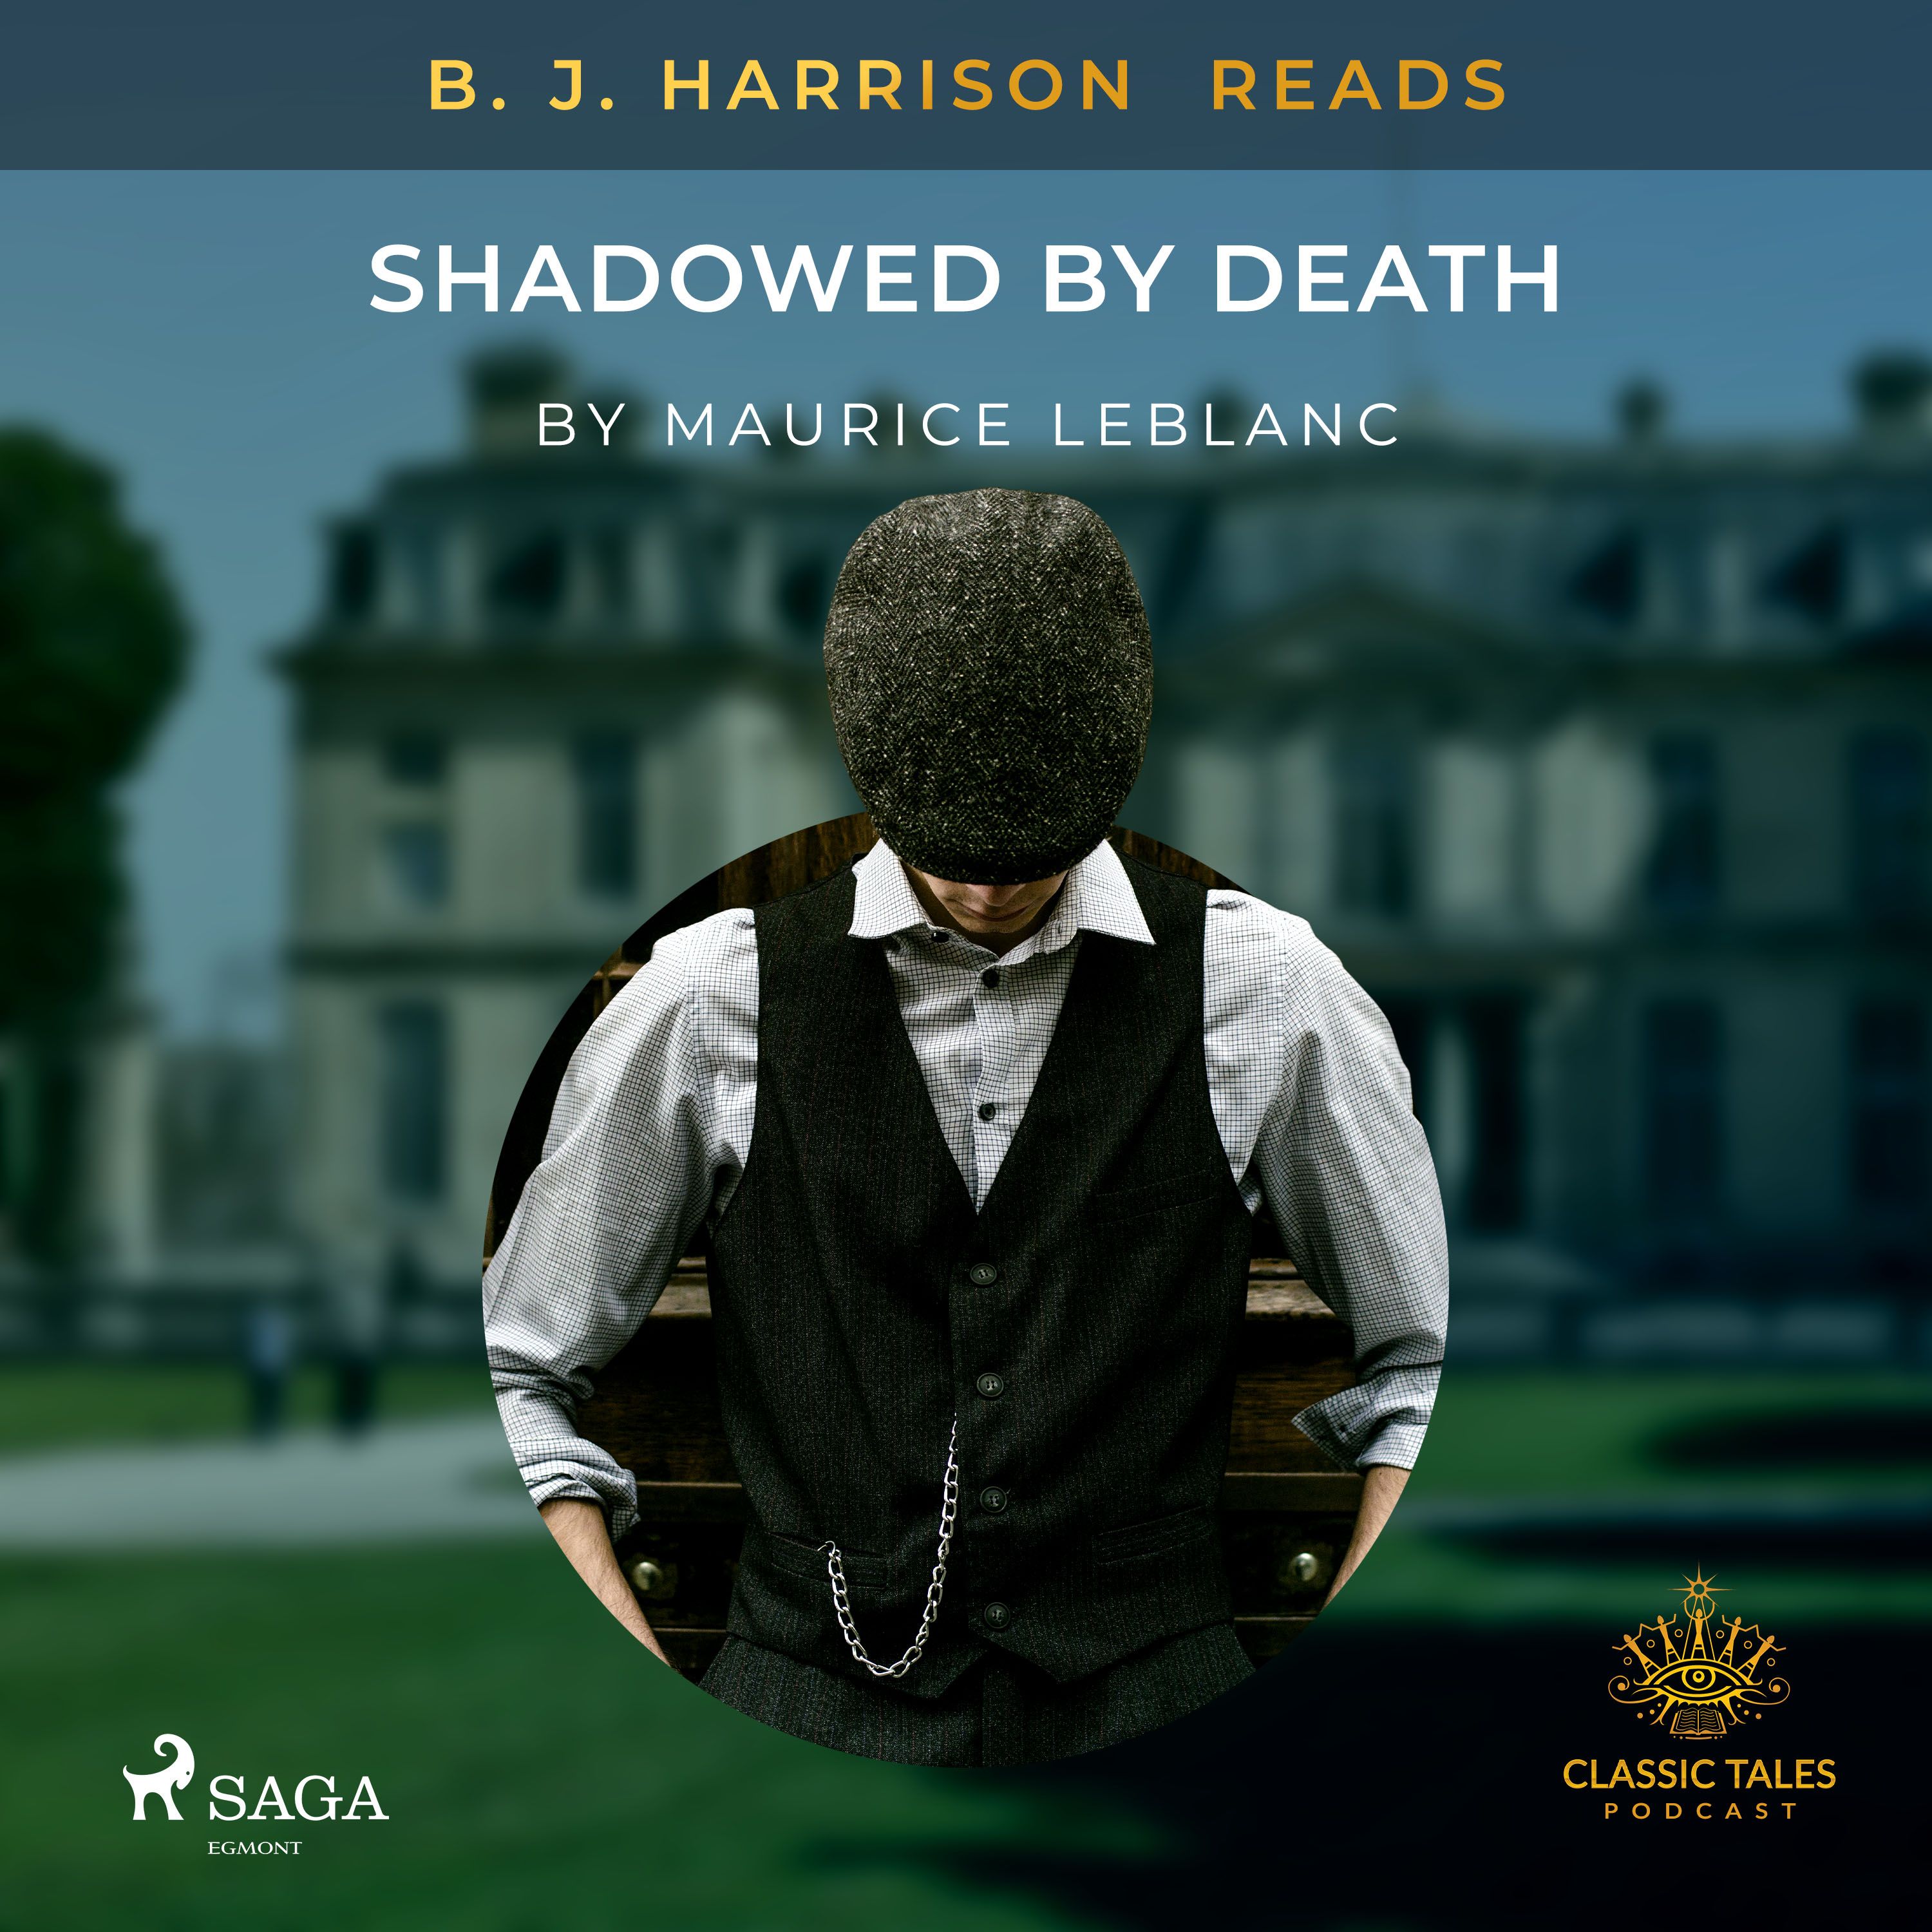 B. J. Harrison Reads Shadowed by Death, ljudbok av Maurice Leblanc